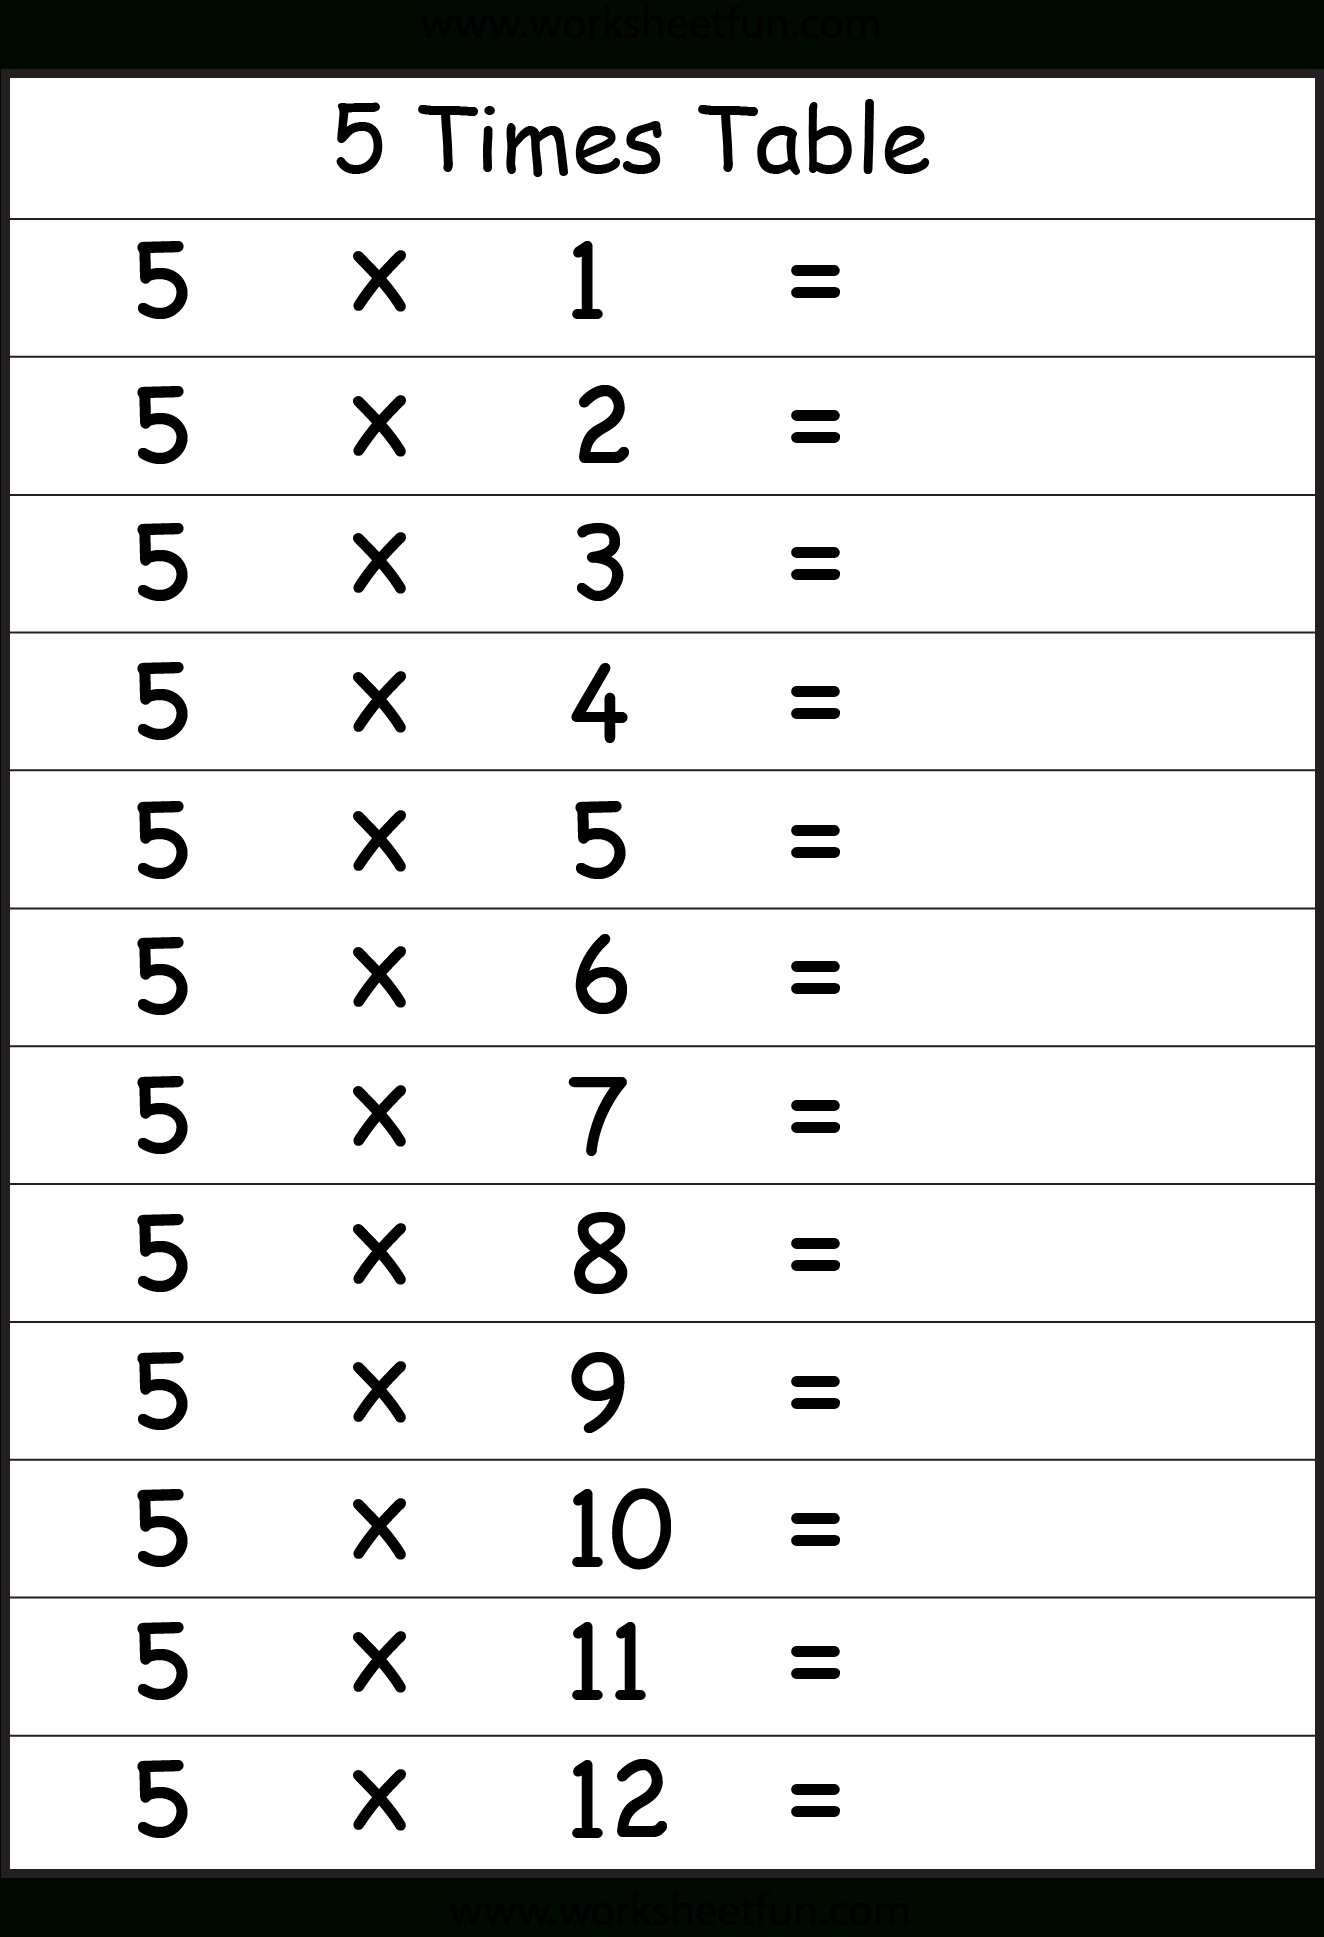 Multiplication Times Tables Worksheets – 2, 3, 4, 5, 6, 7, 8, 9,10 | Times Tables Worksheets Printable